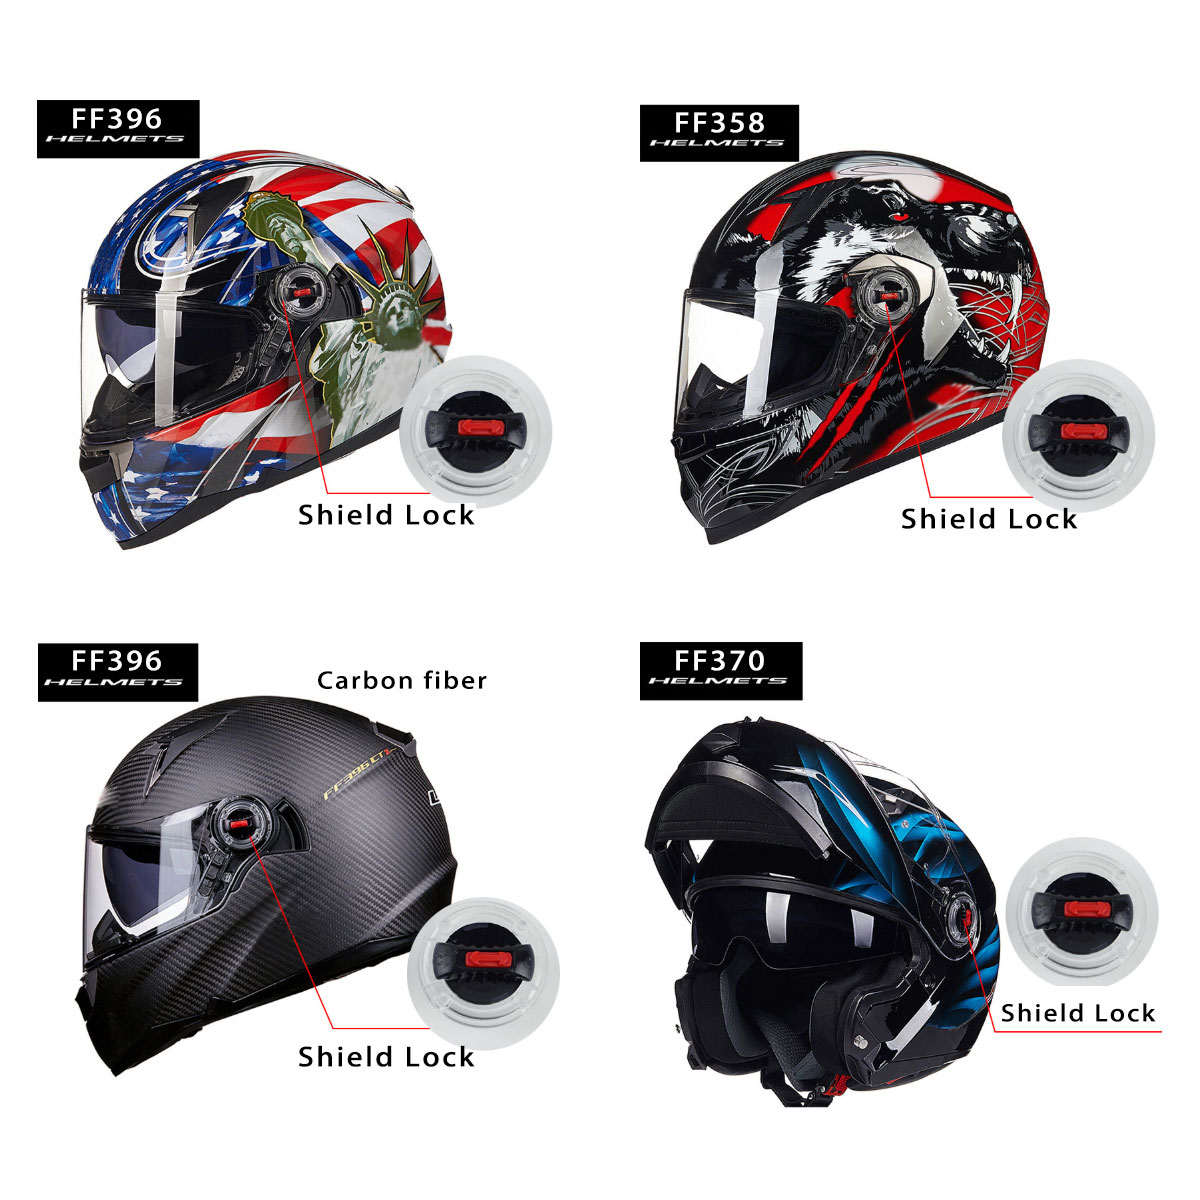 LS2 Helmets Visor Shield Lock For LS2 FF325 FF370 FF386 OF569 FF396 FF358 Helmet 